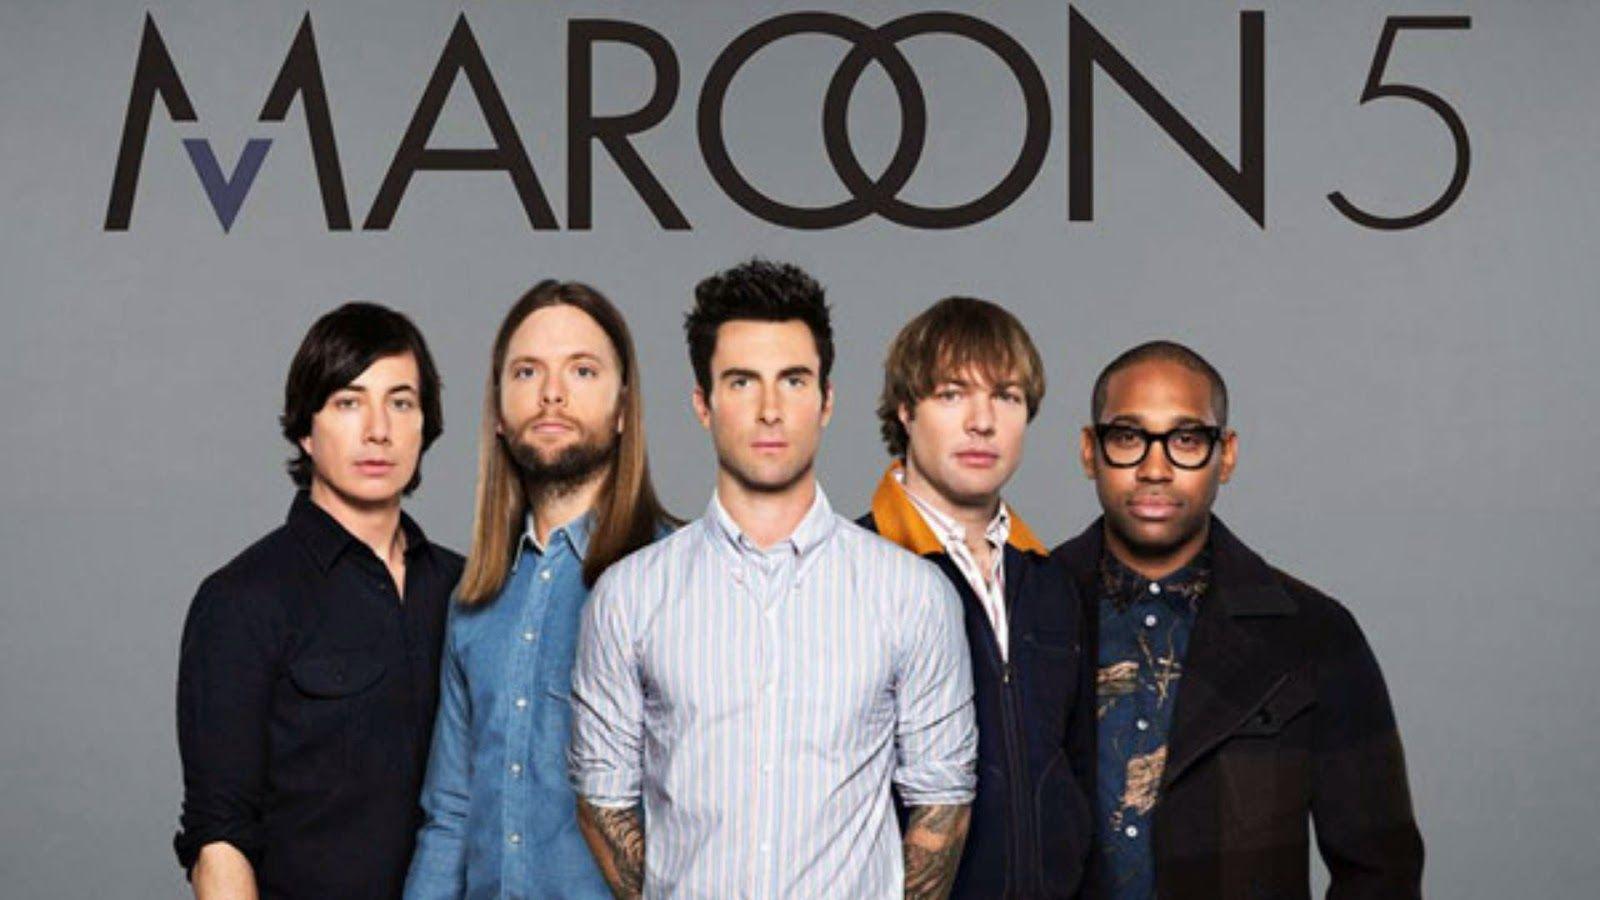 Maroon 5 Sugar Photo Galery -o- Wallpaper Picture Photo